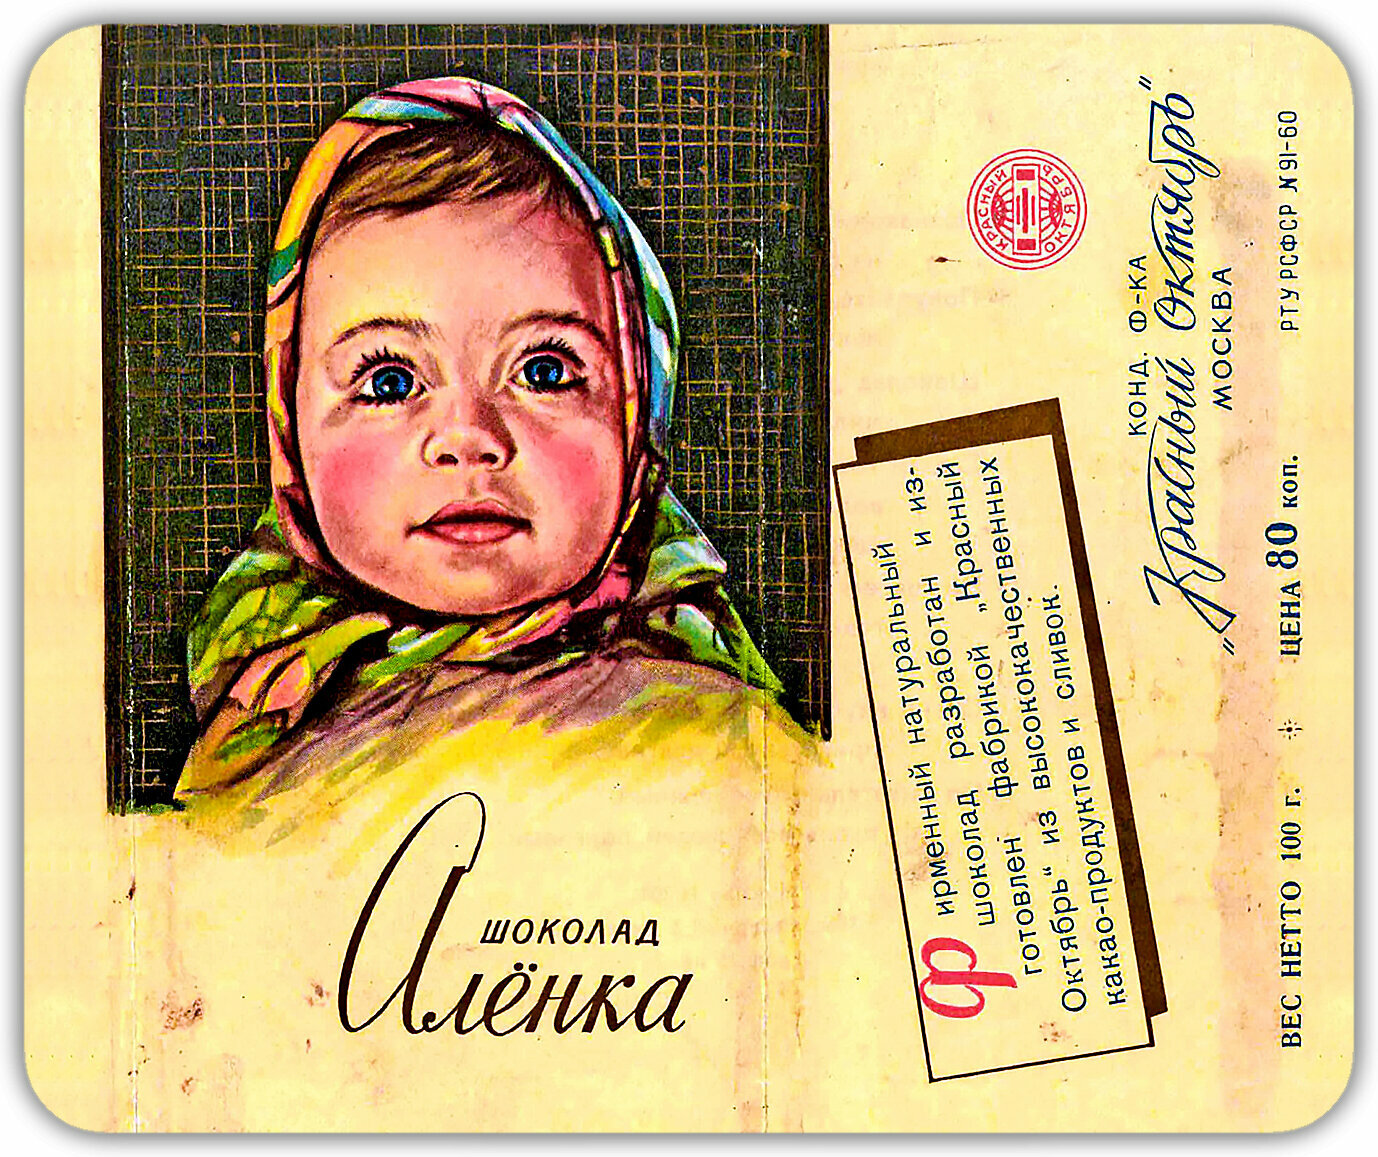 Коврик для мыши "Шоколад Аленка из СССР" (24 x 20 см x 3 мм)